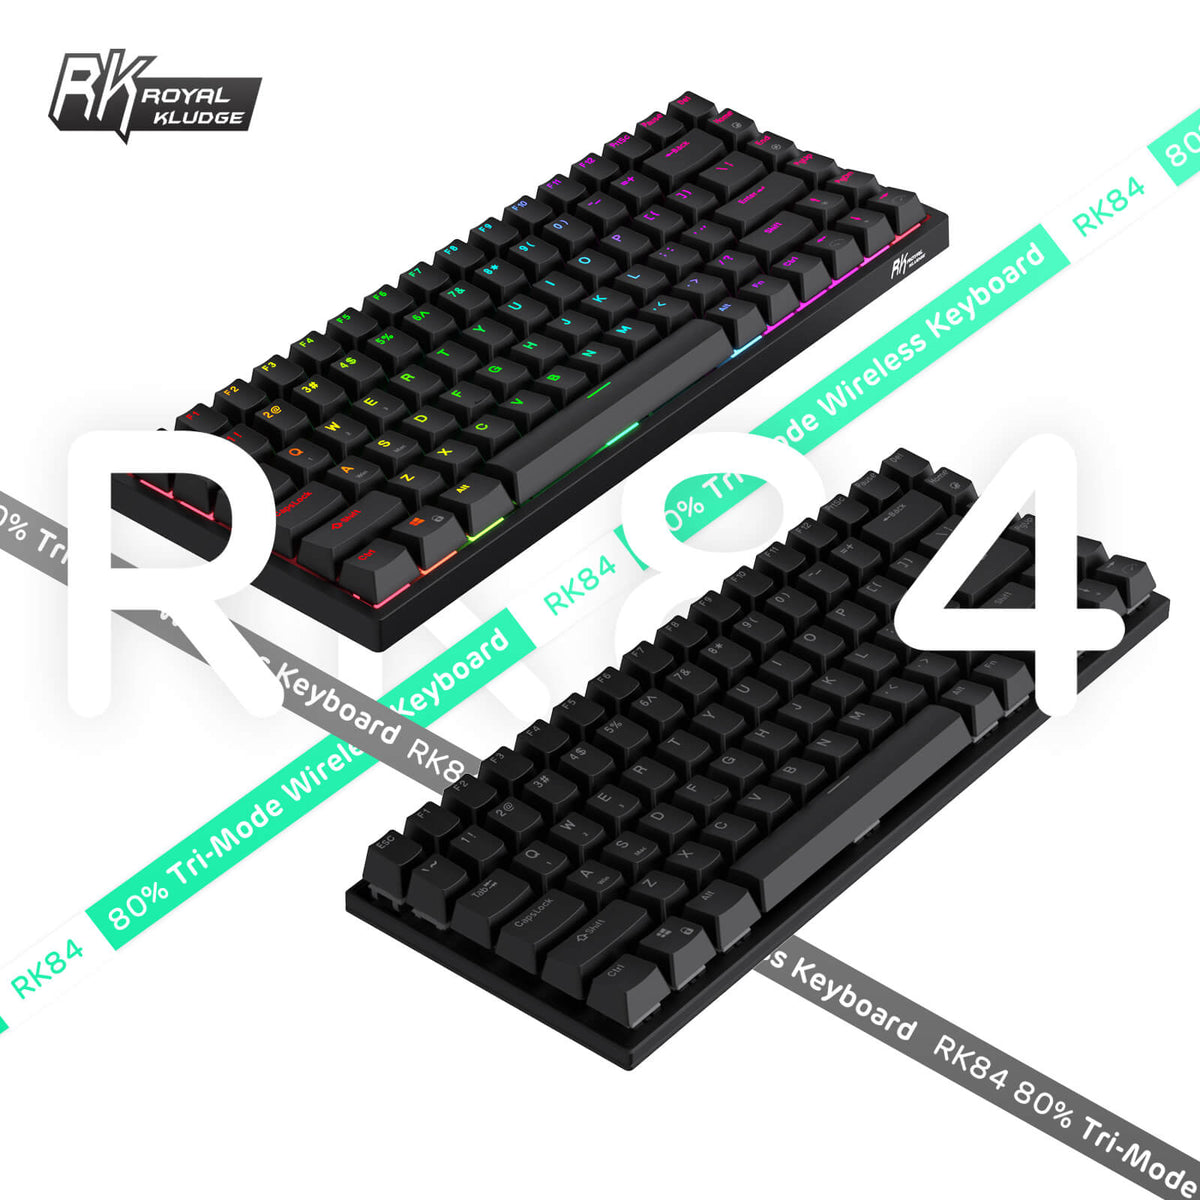 Royal Kludge RK61 Dual Mode RGB Wireless Mechanical Keyboard - The